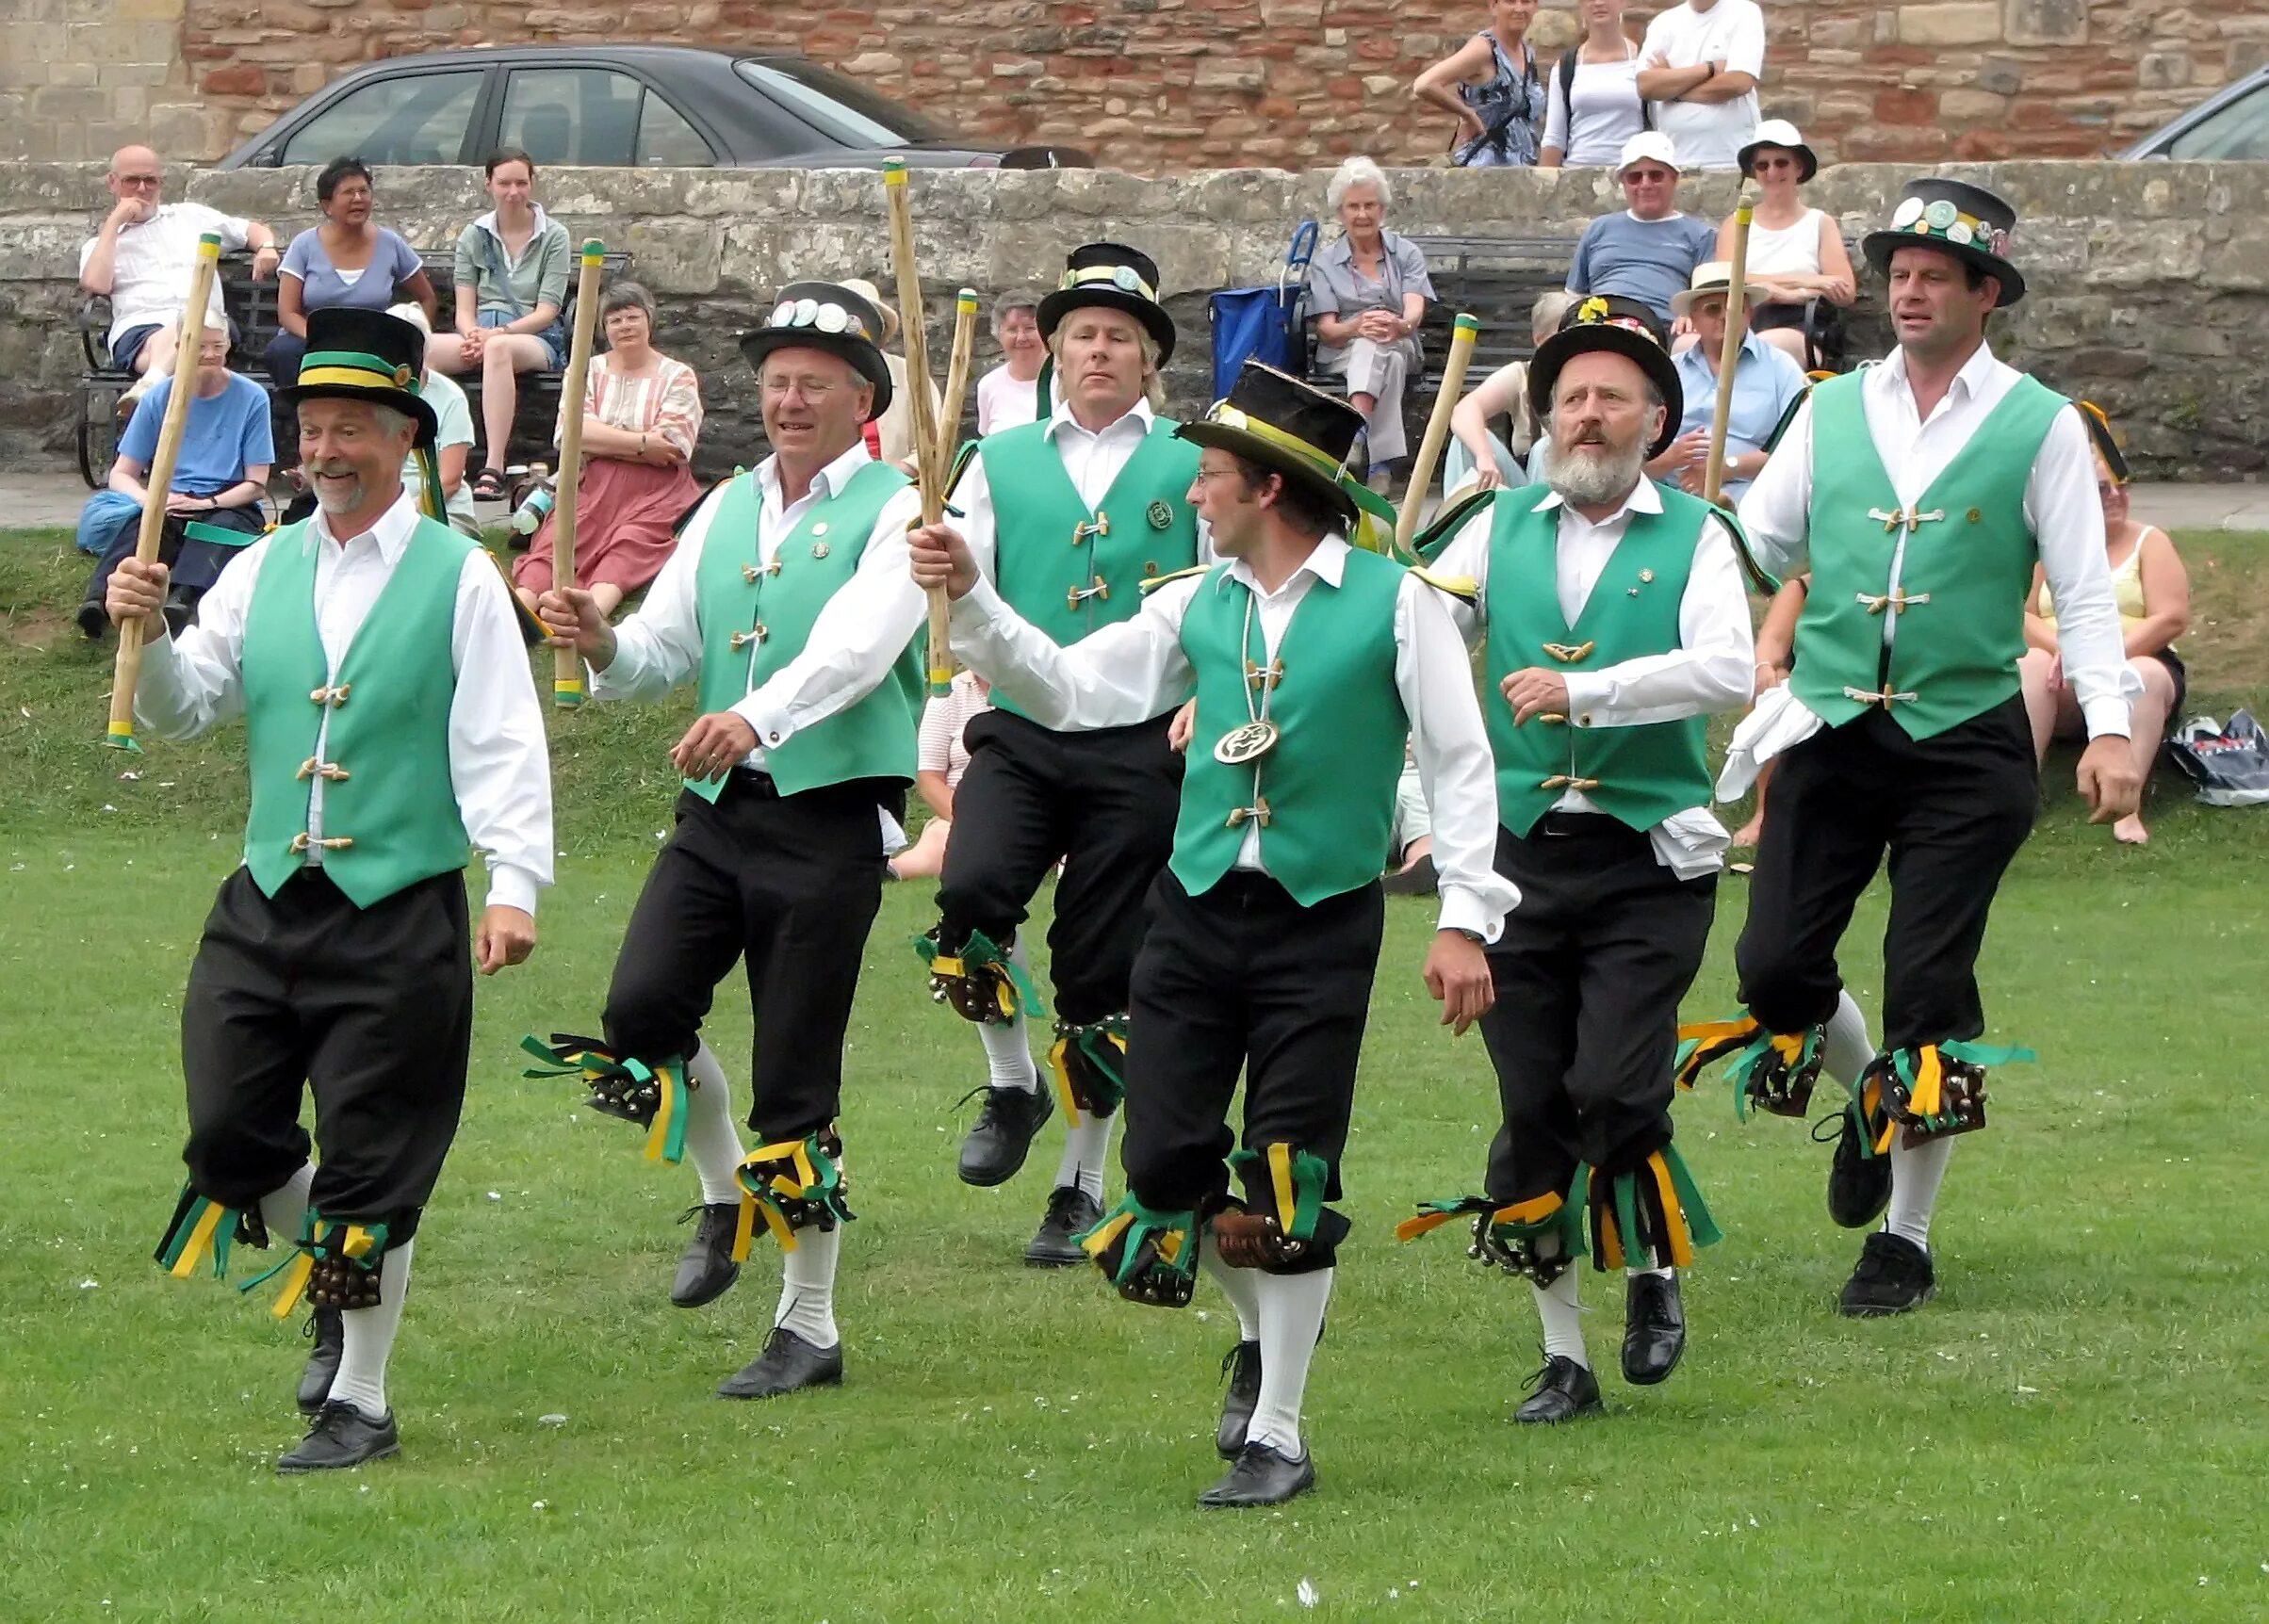 Моррис дансинг Великобритания. Танец англичан Моррис. Моррис танцы в Британии. Morris Dancers в Великобритании. Irish traditions